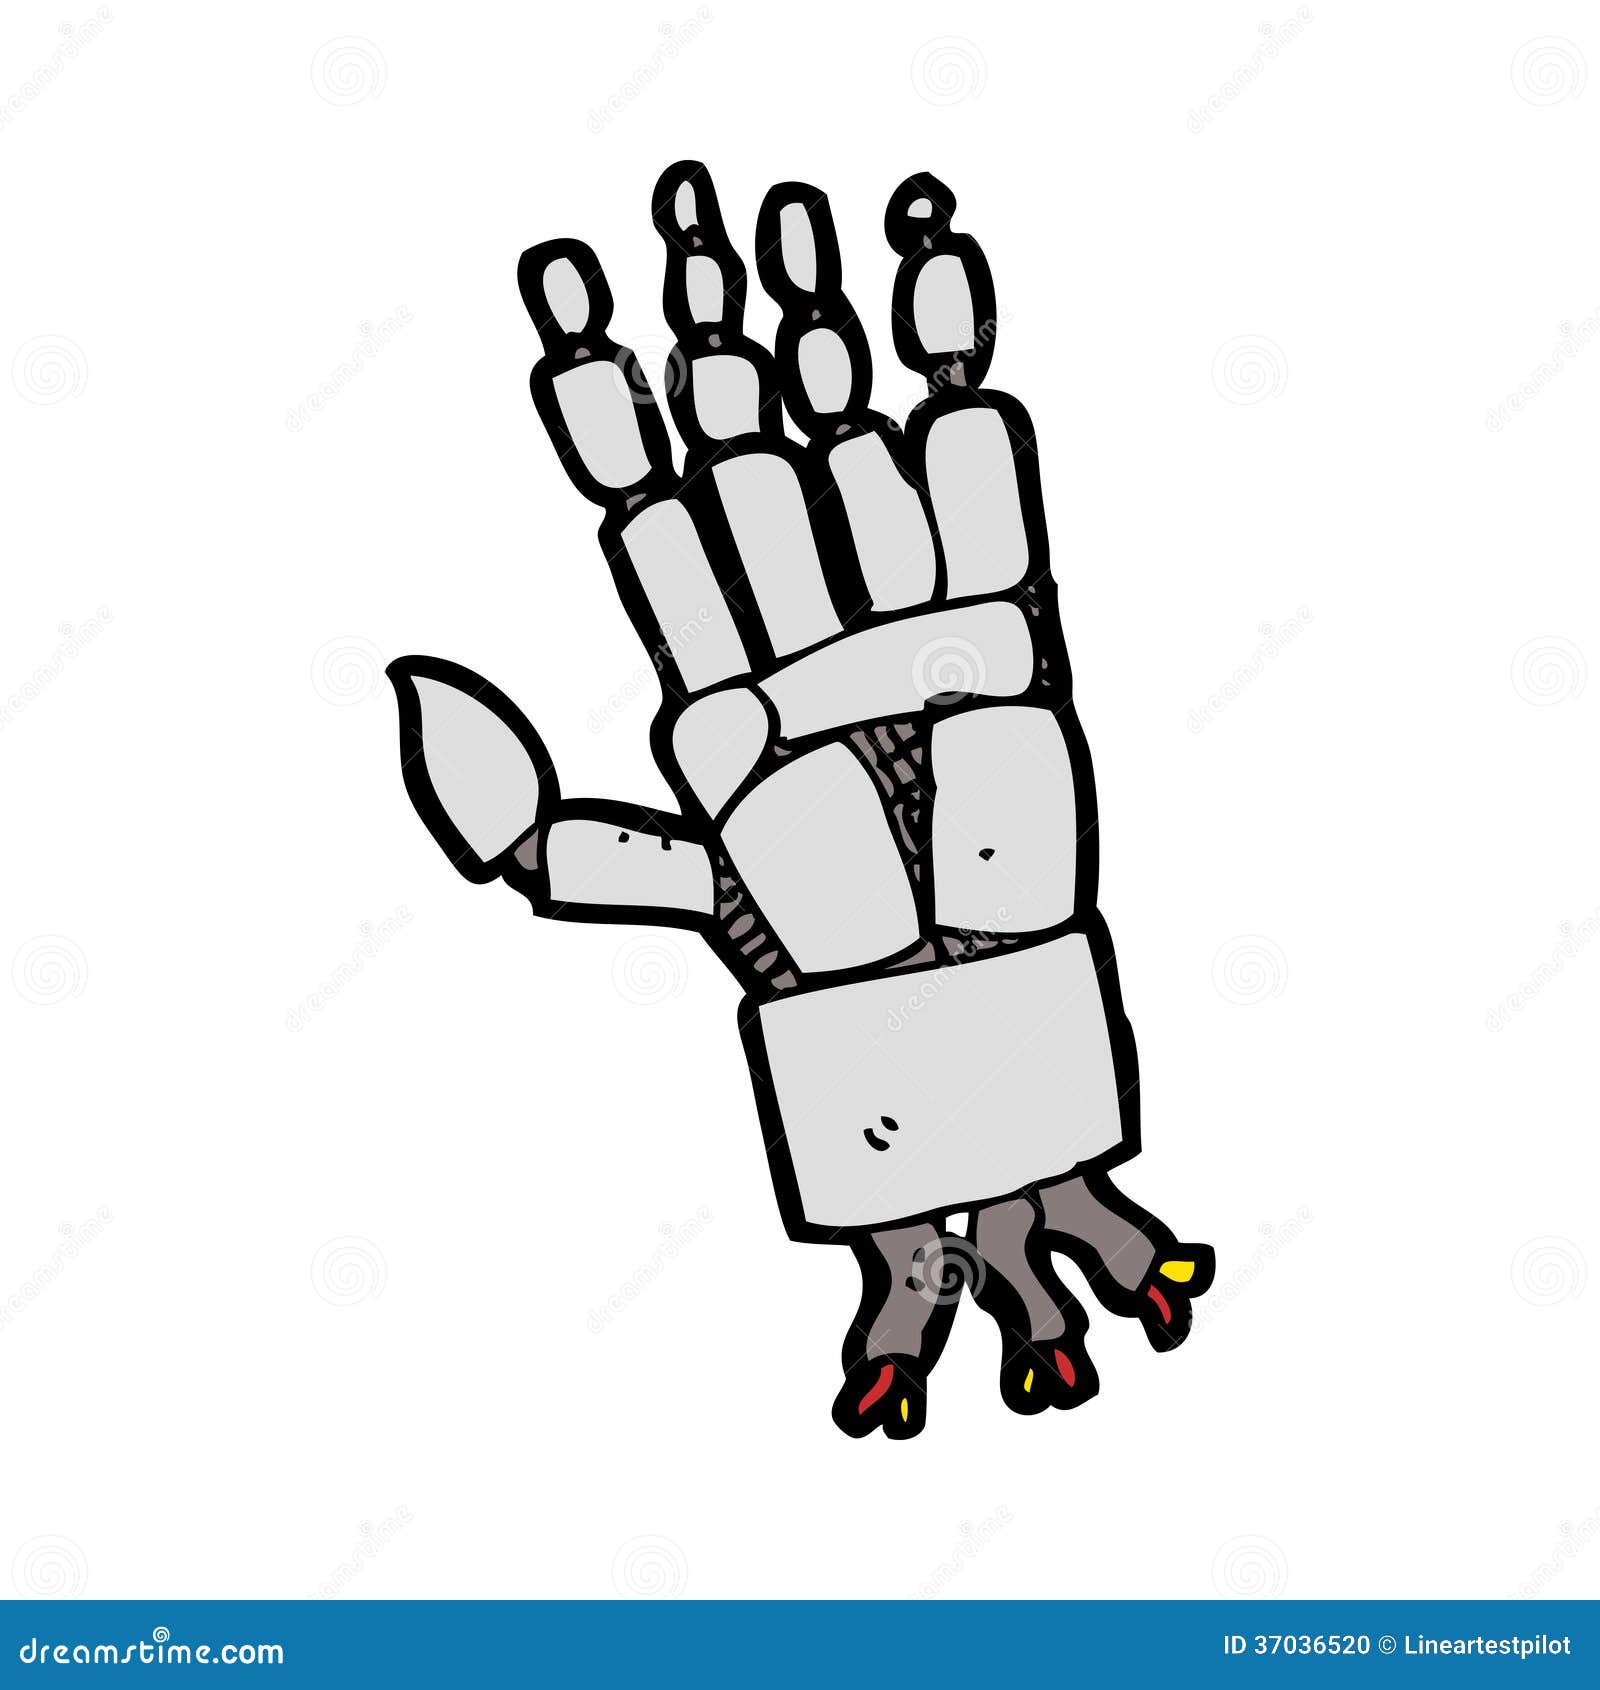 Cartoon robot hand stock vector. Illustration of - 37036520